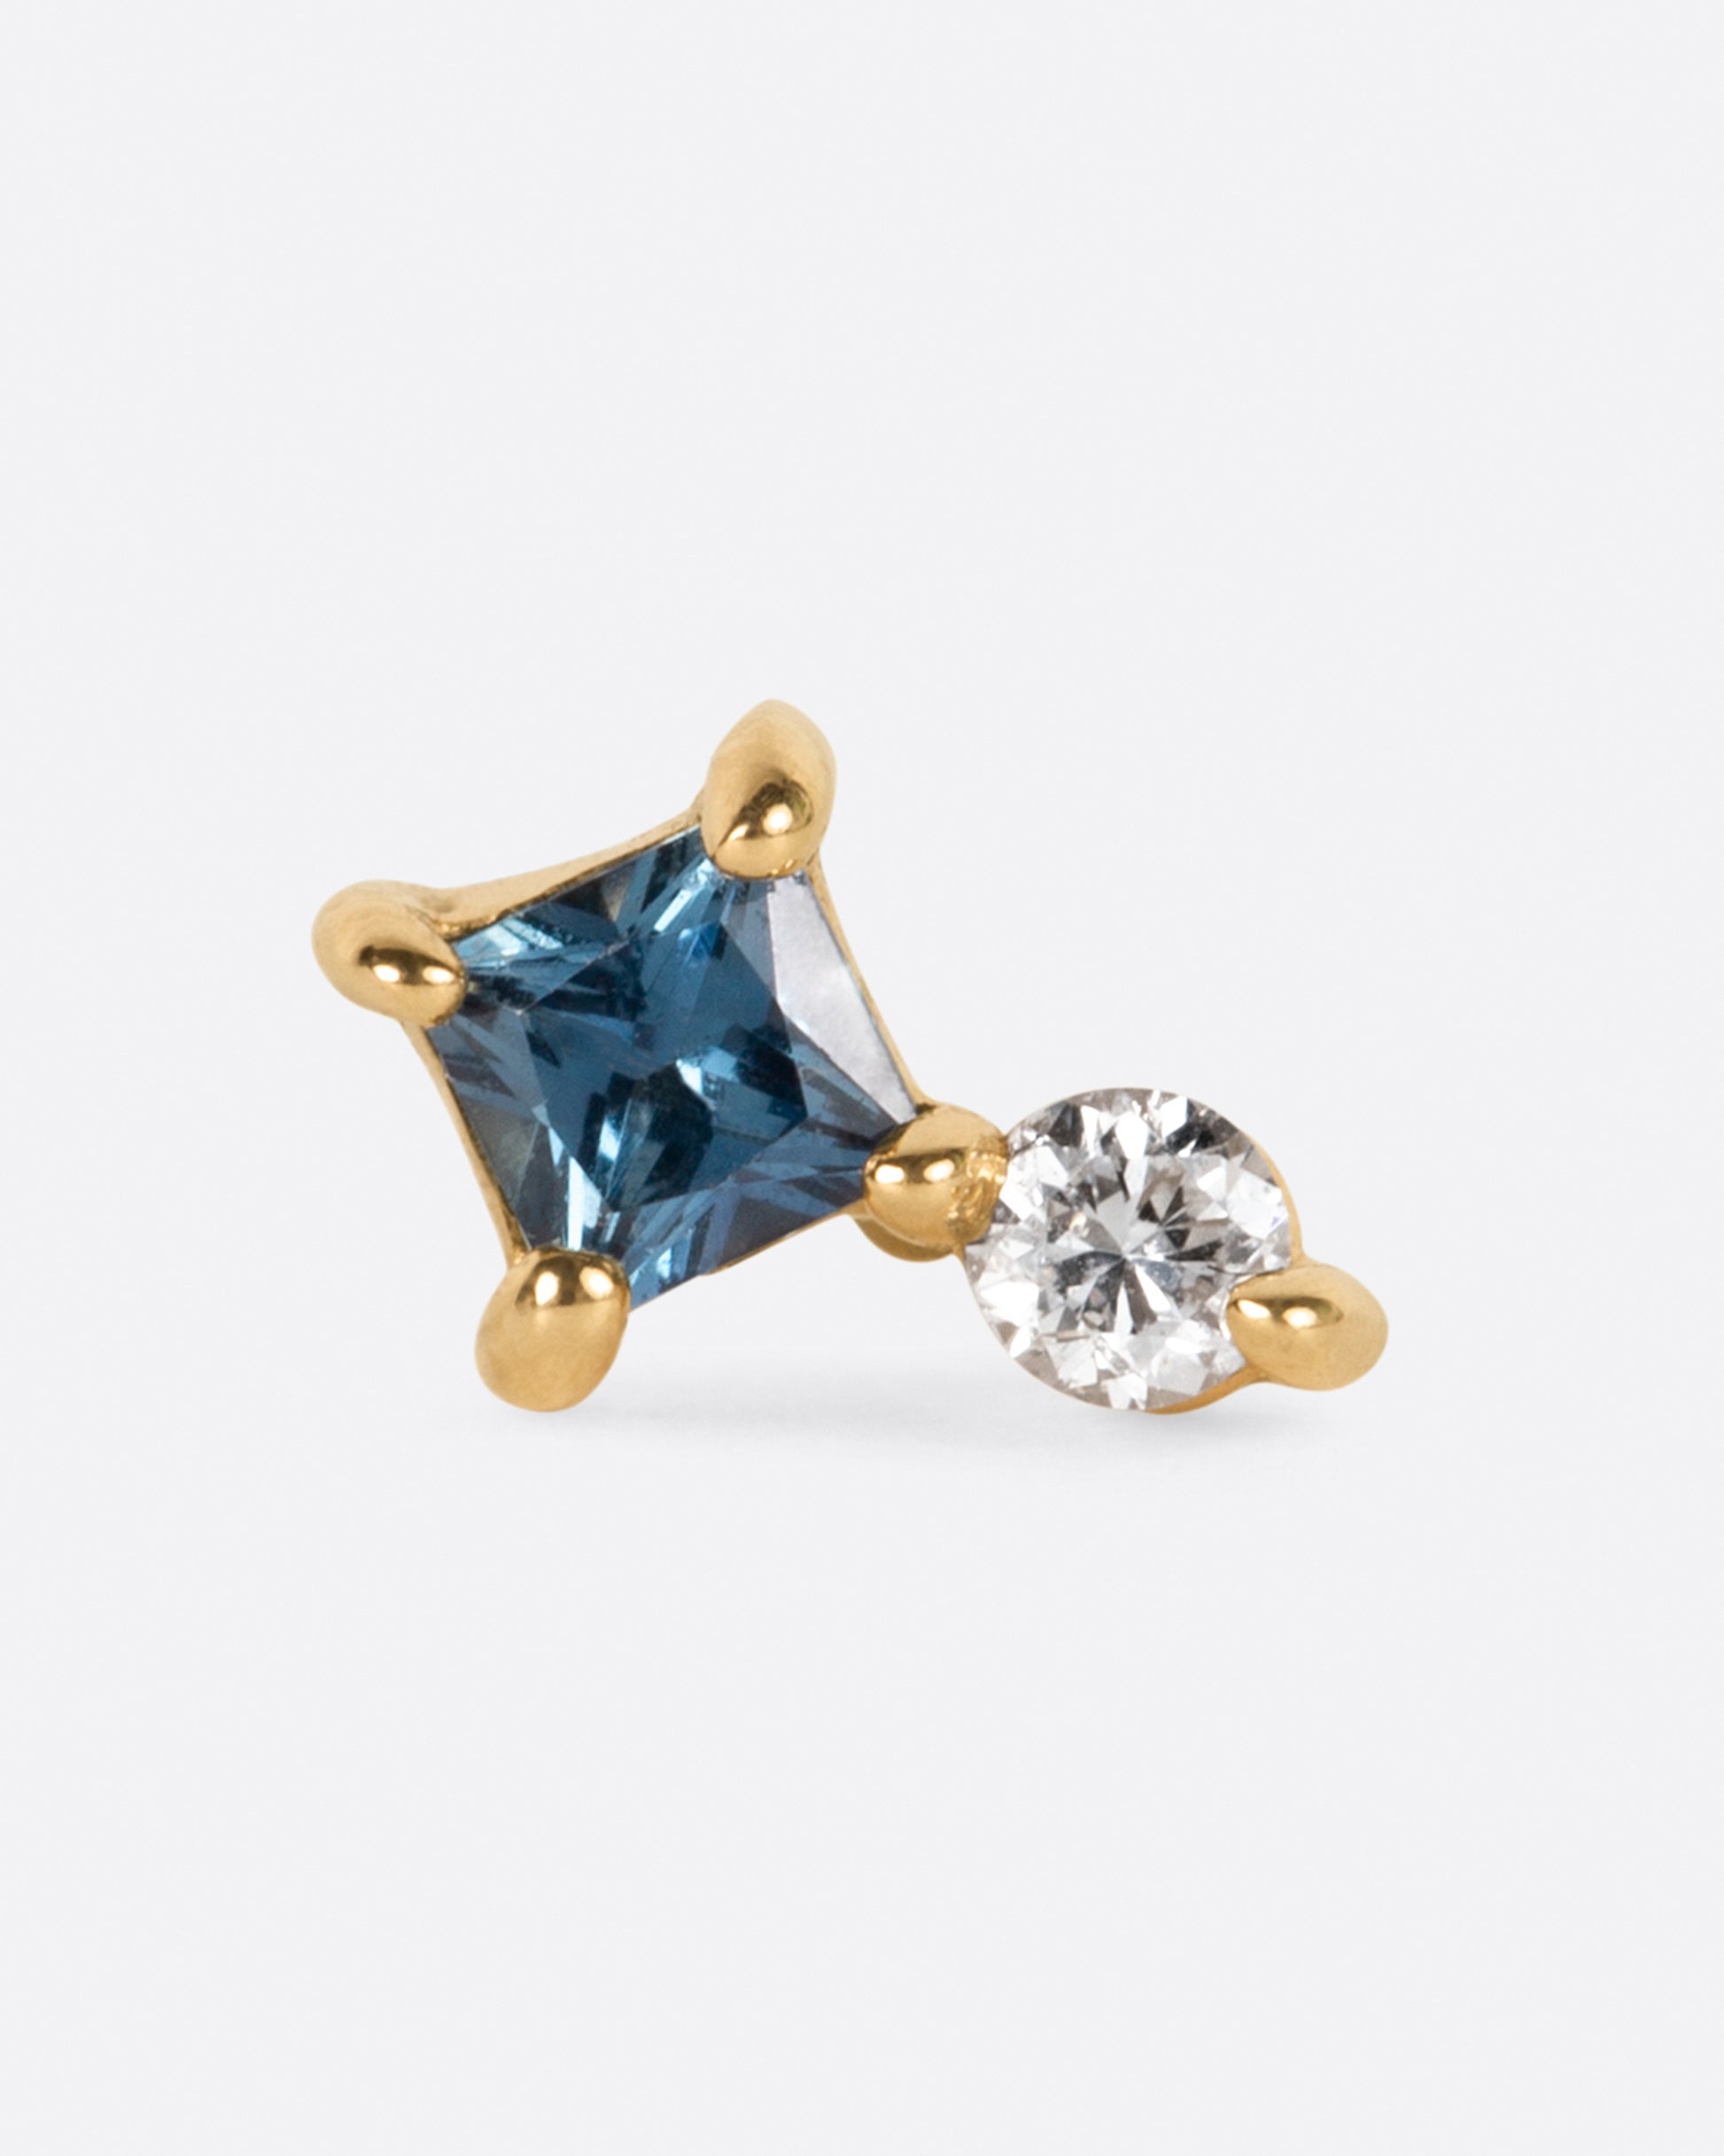 A prong set round diamond sitting atop a princess cut teal blue sapphire.